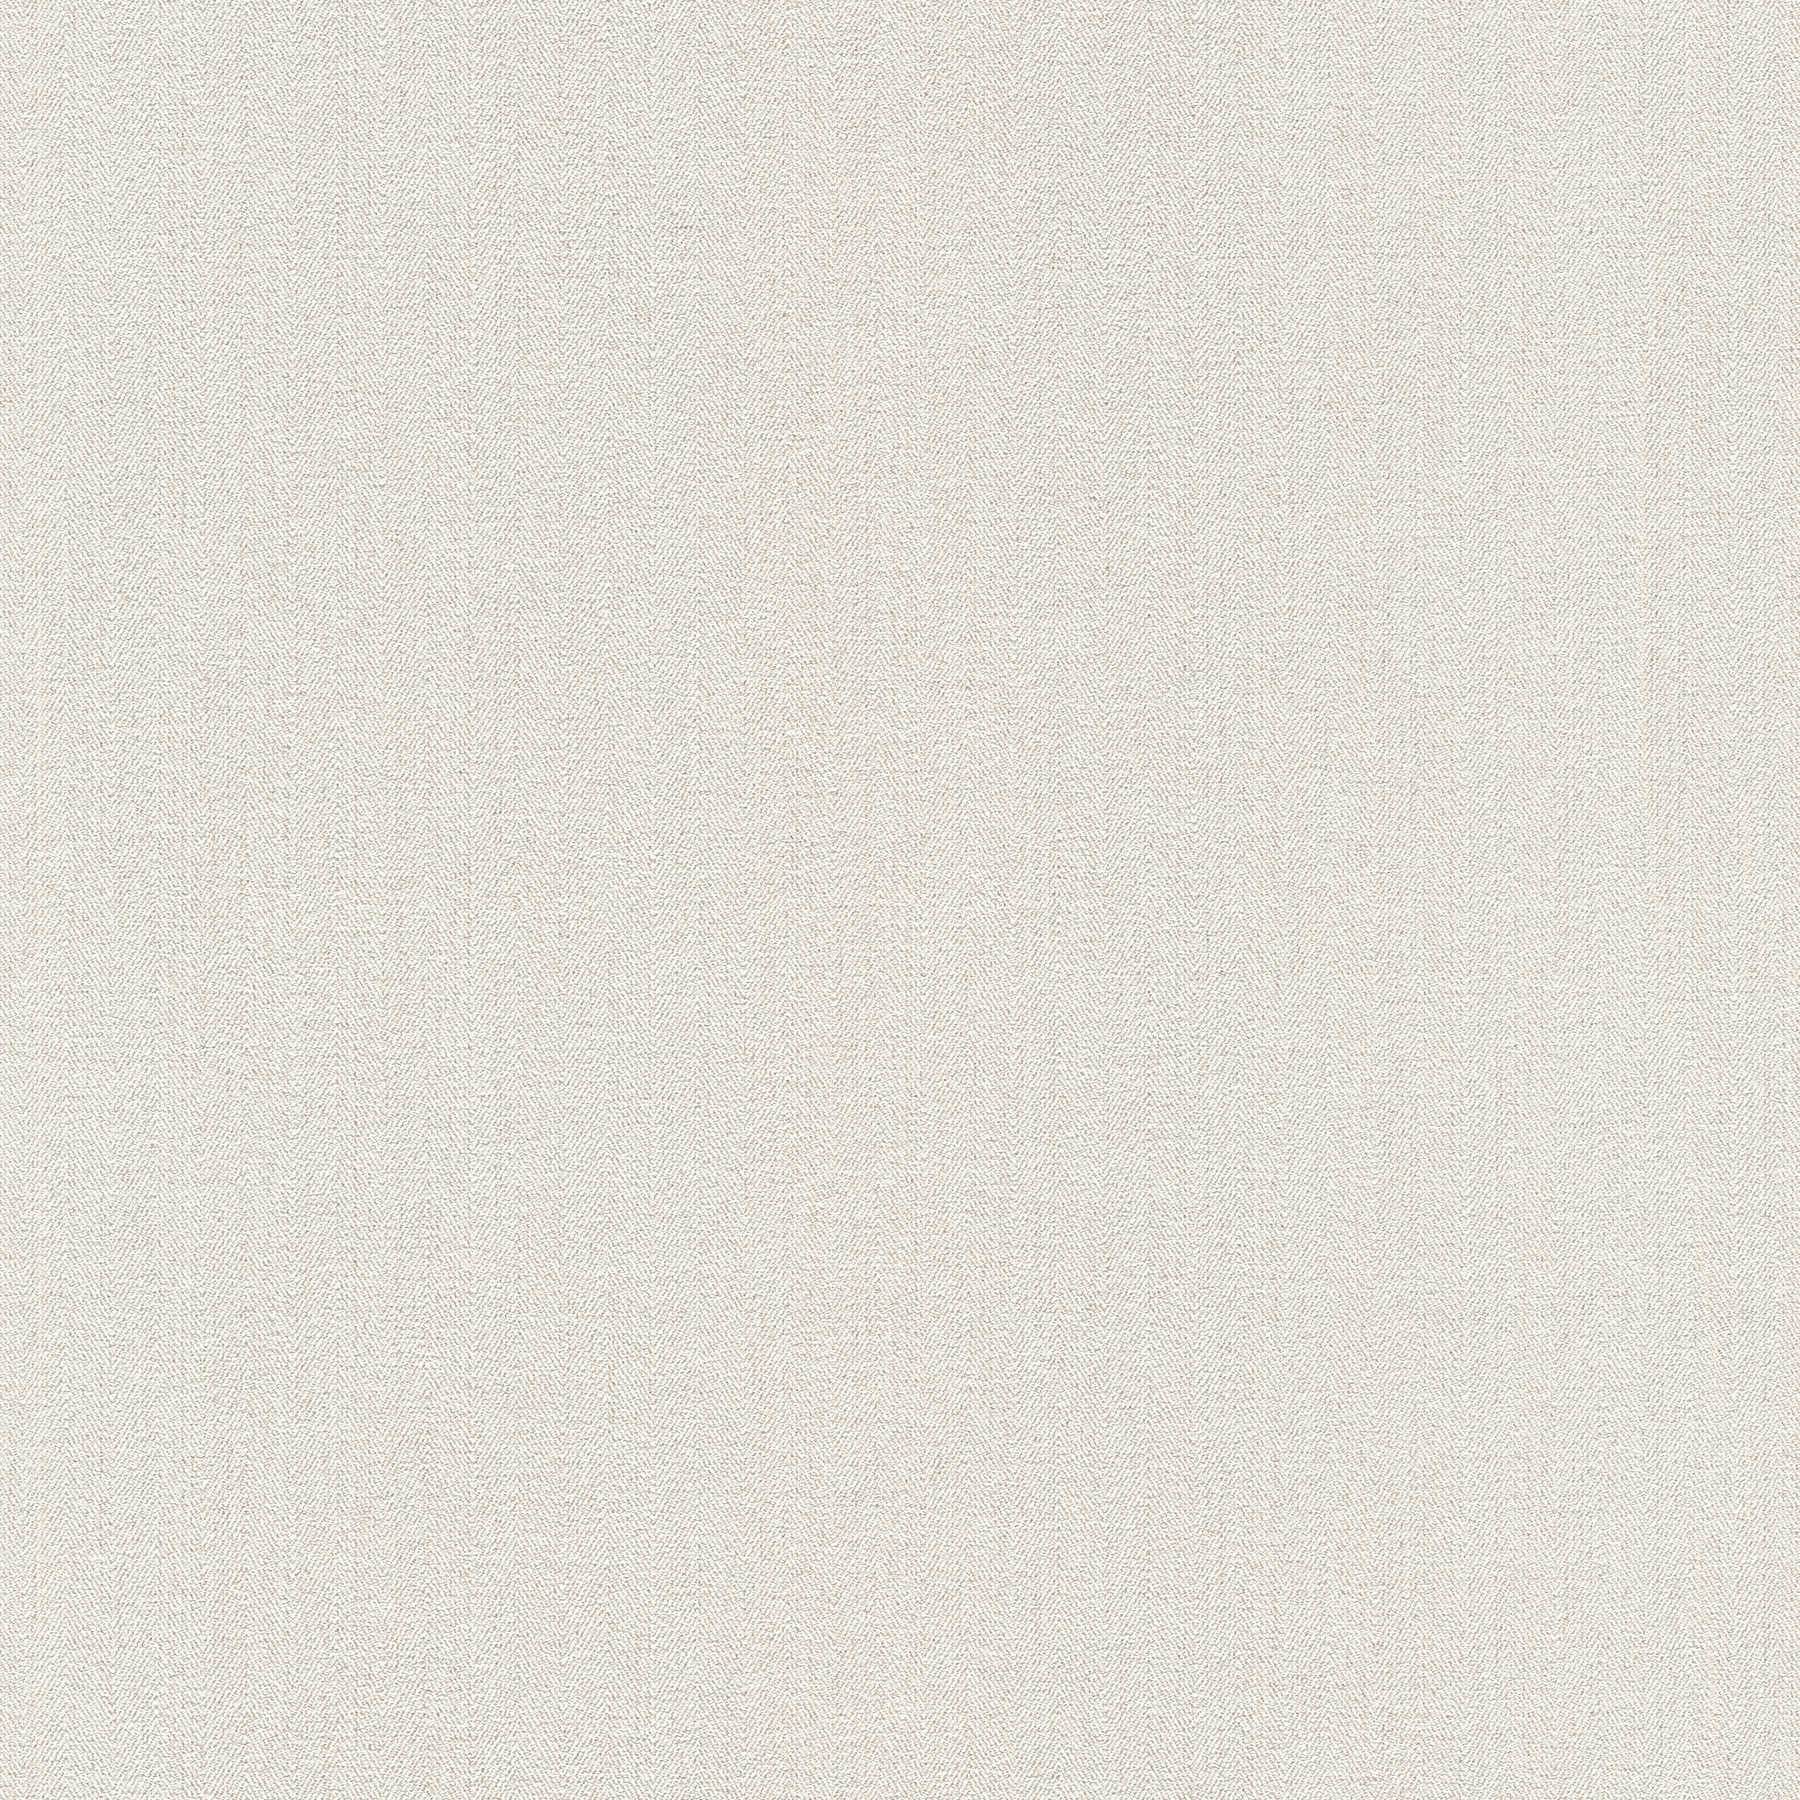 Non-woven wallpaper with textile look & herringbone pattern - beige
